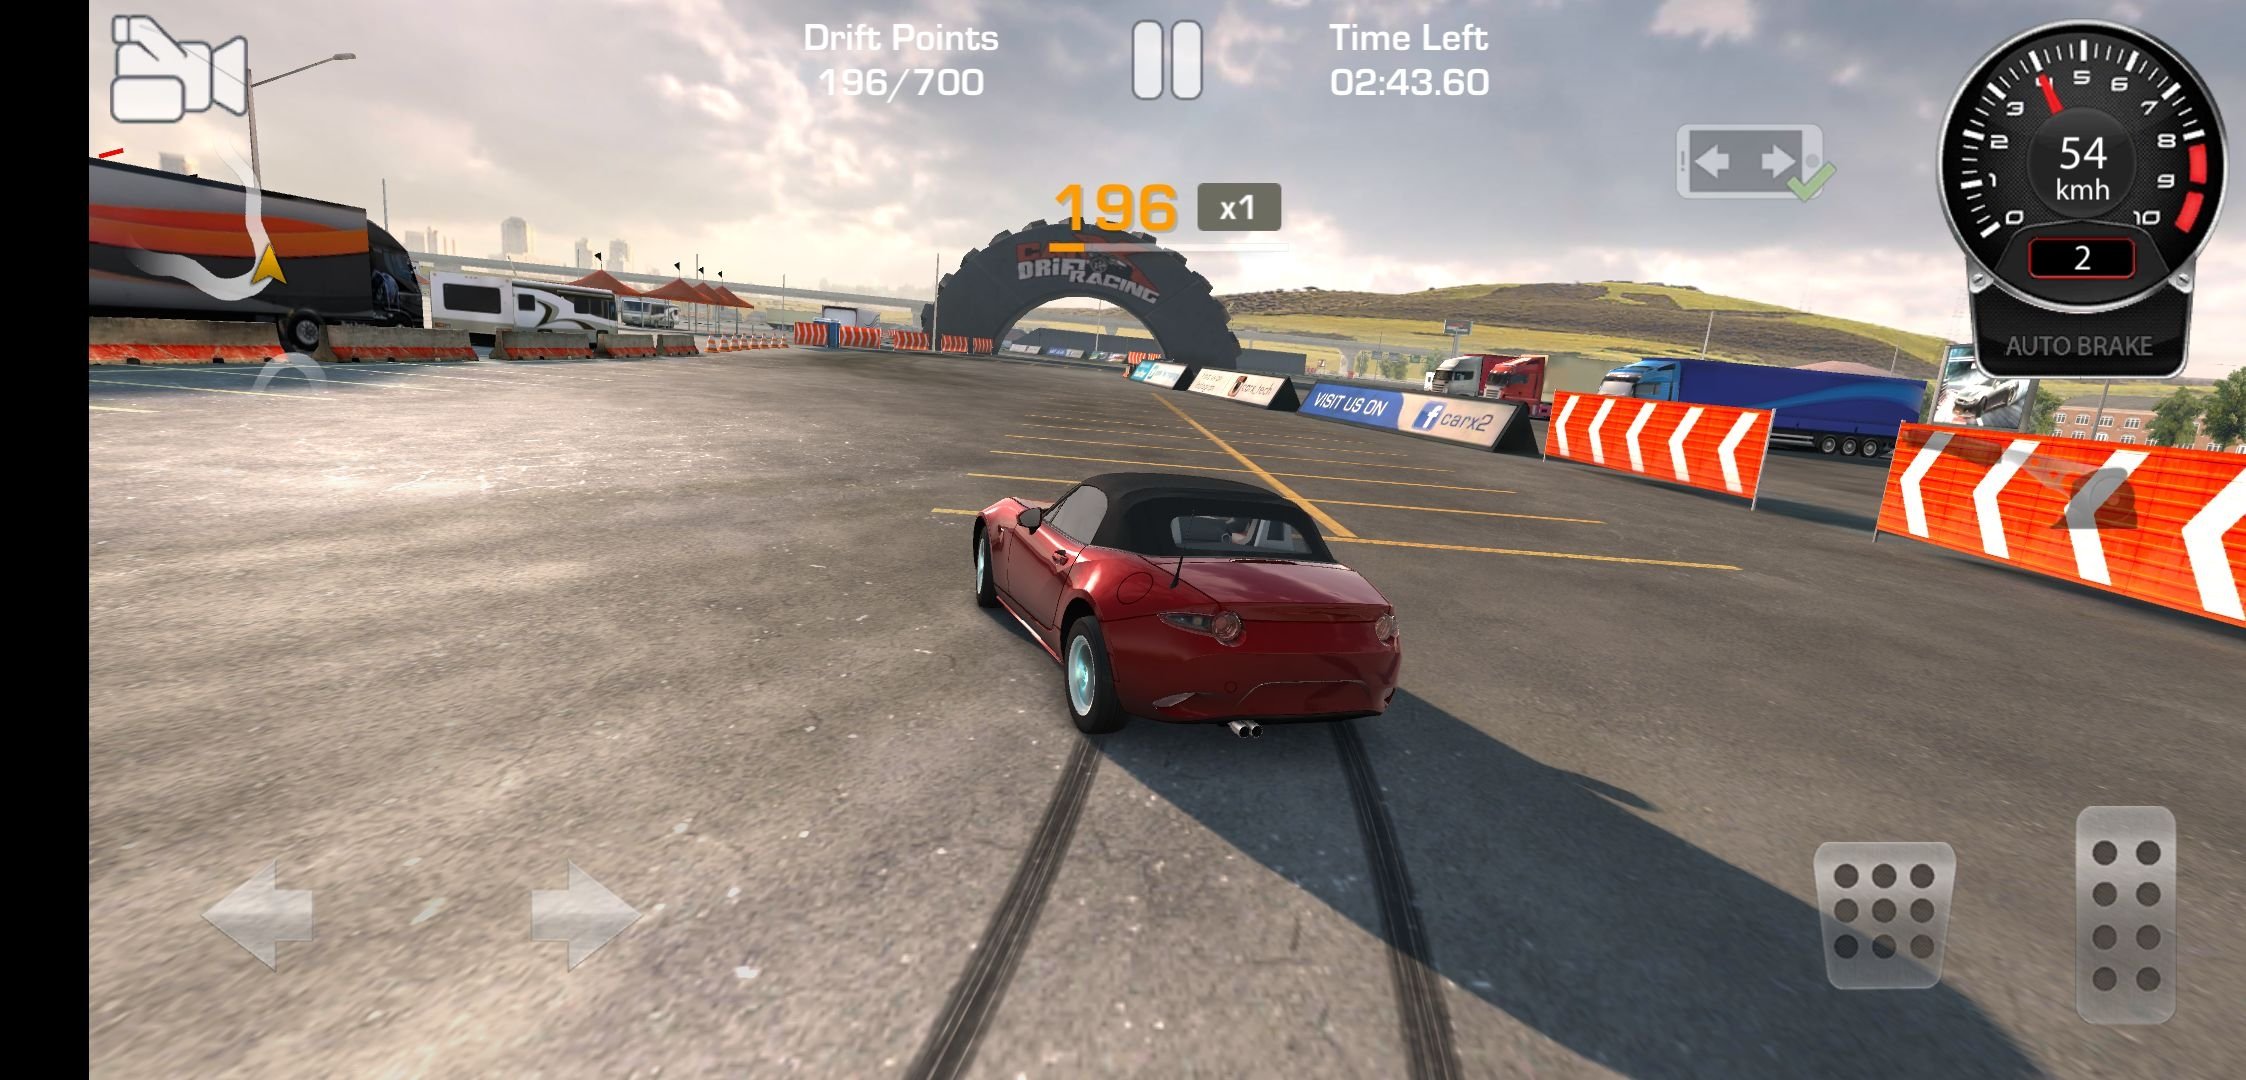 Racing Car Drift for mac download free